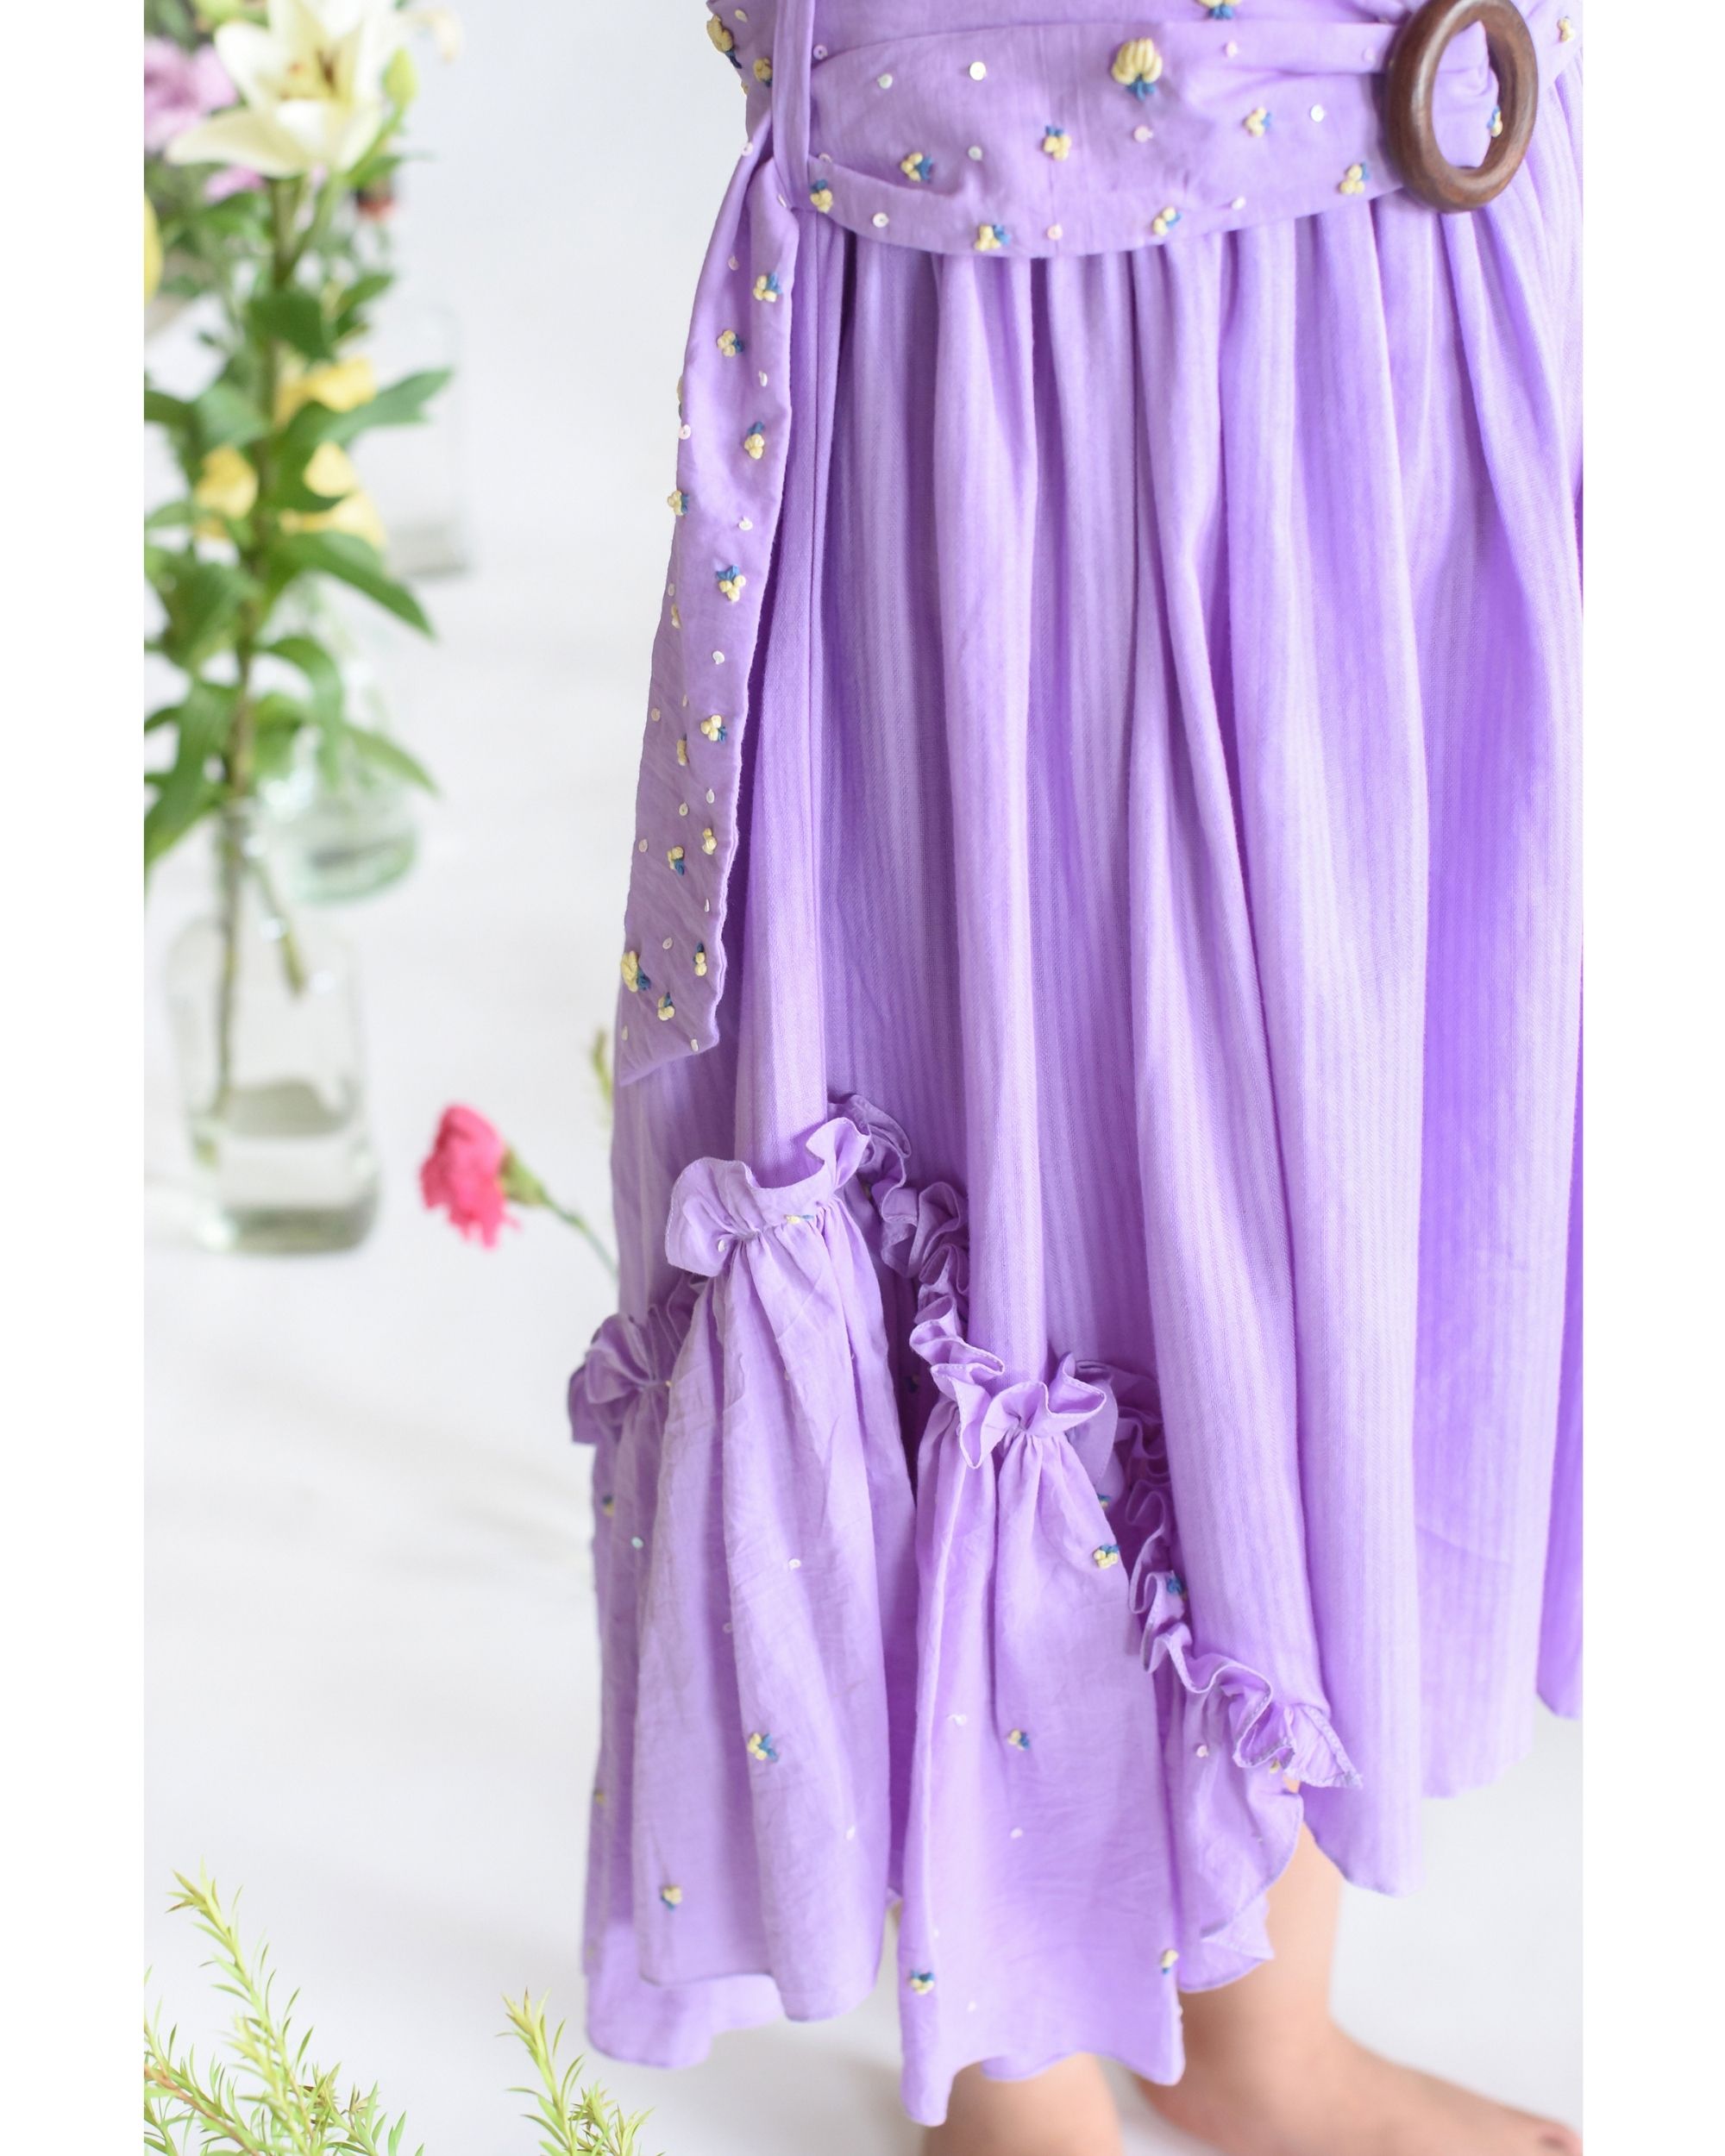 Lavender embroidered gather dress by Littleens | The Secret Label